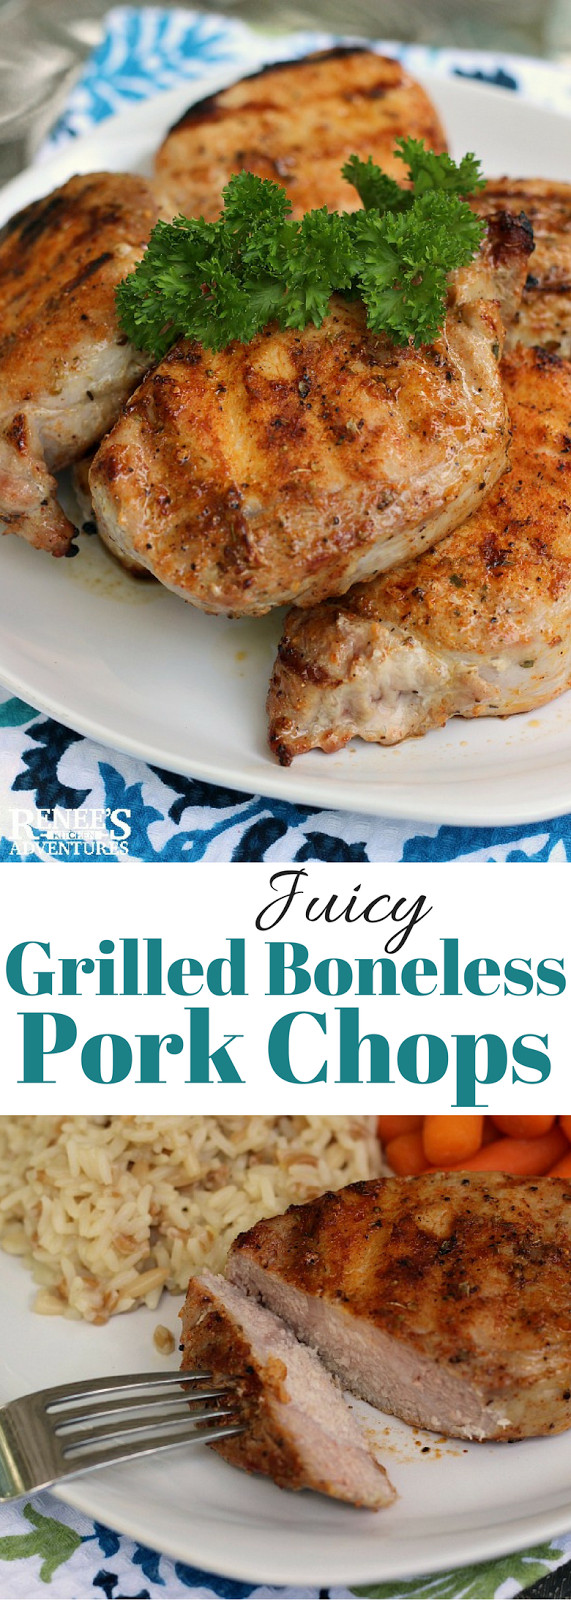 Grilled Boneless Pork Chops
 Juicy Grilled Boneless Pork Chops